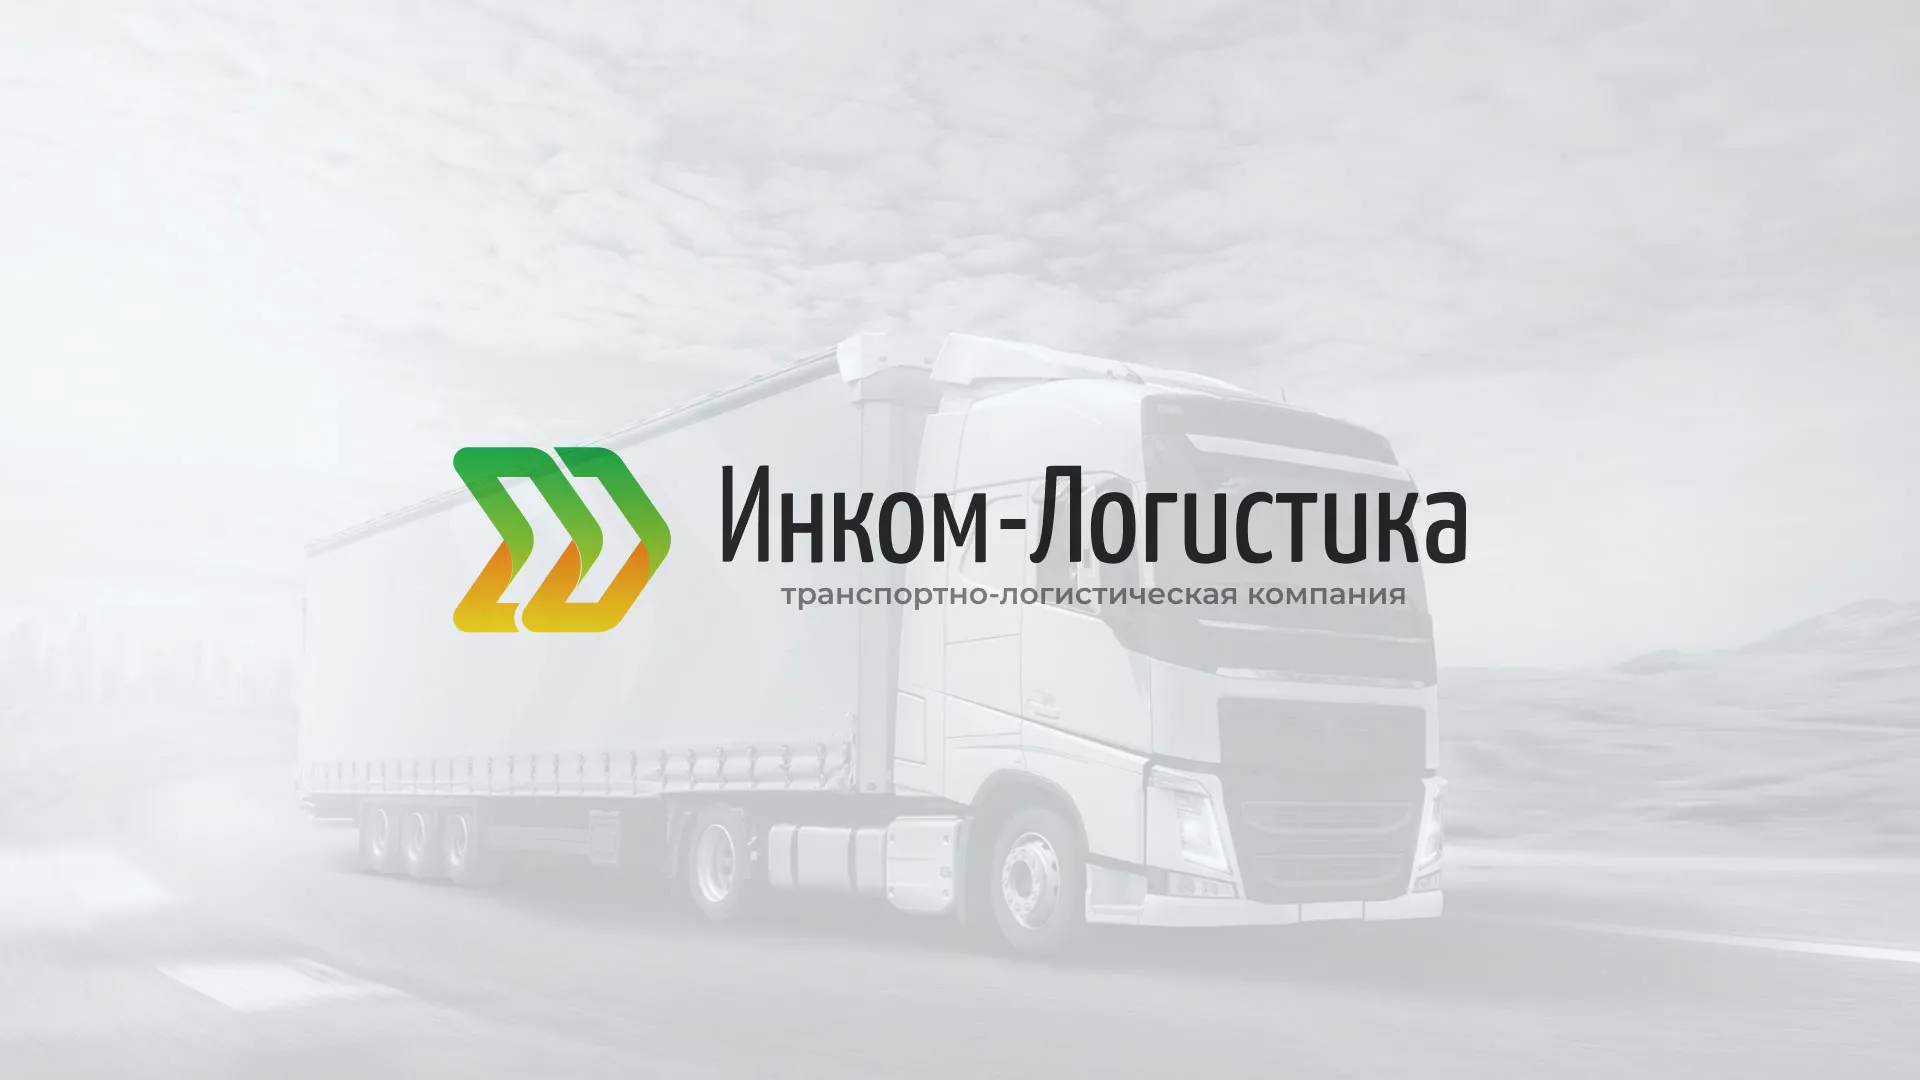 Разработка логотипа и сайта компании «Инком-Логистика» в Новокузнецке